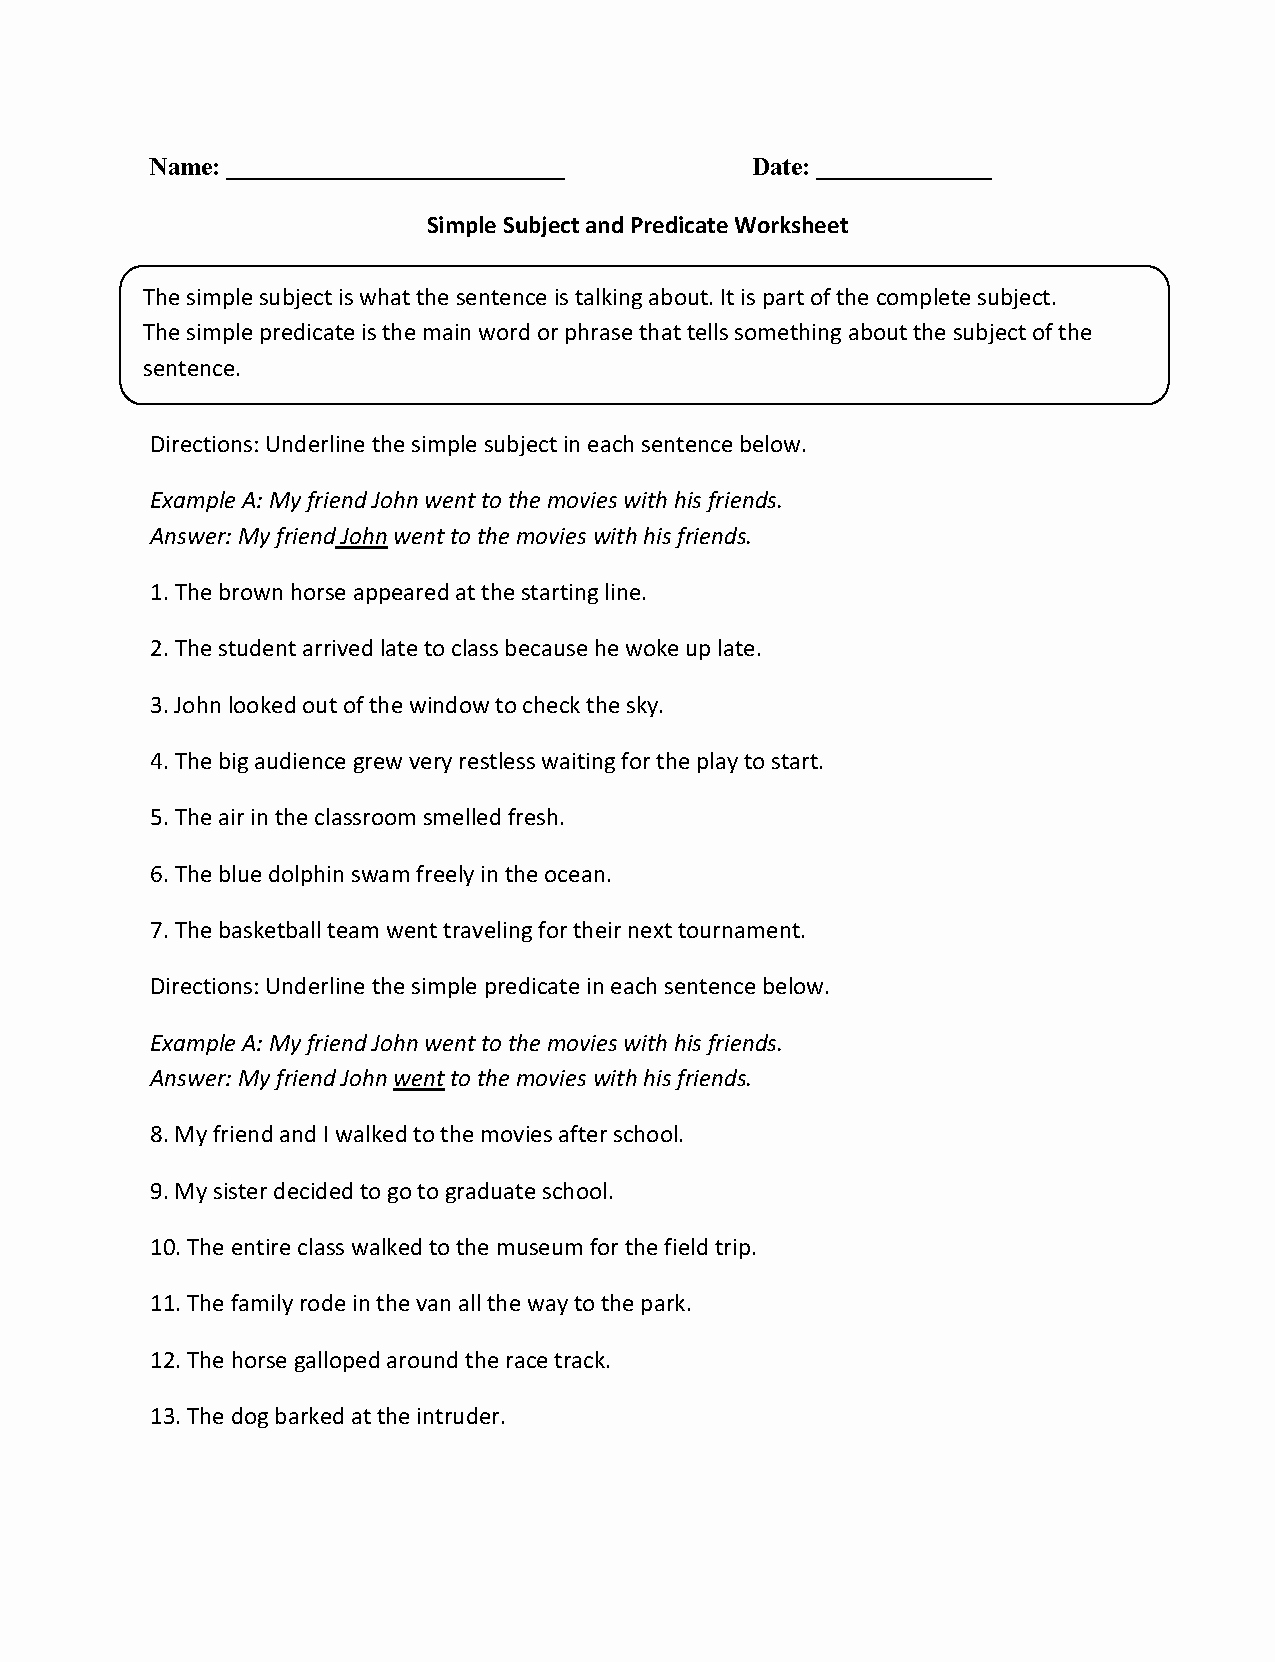 Subject and Predicate Worksheet Inspirational Simple Subject and Predicate Worksheet